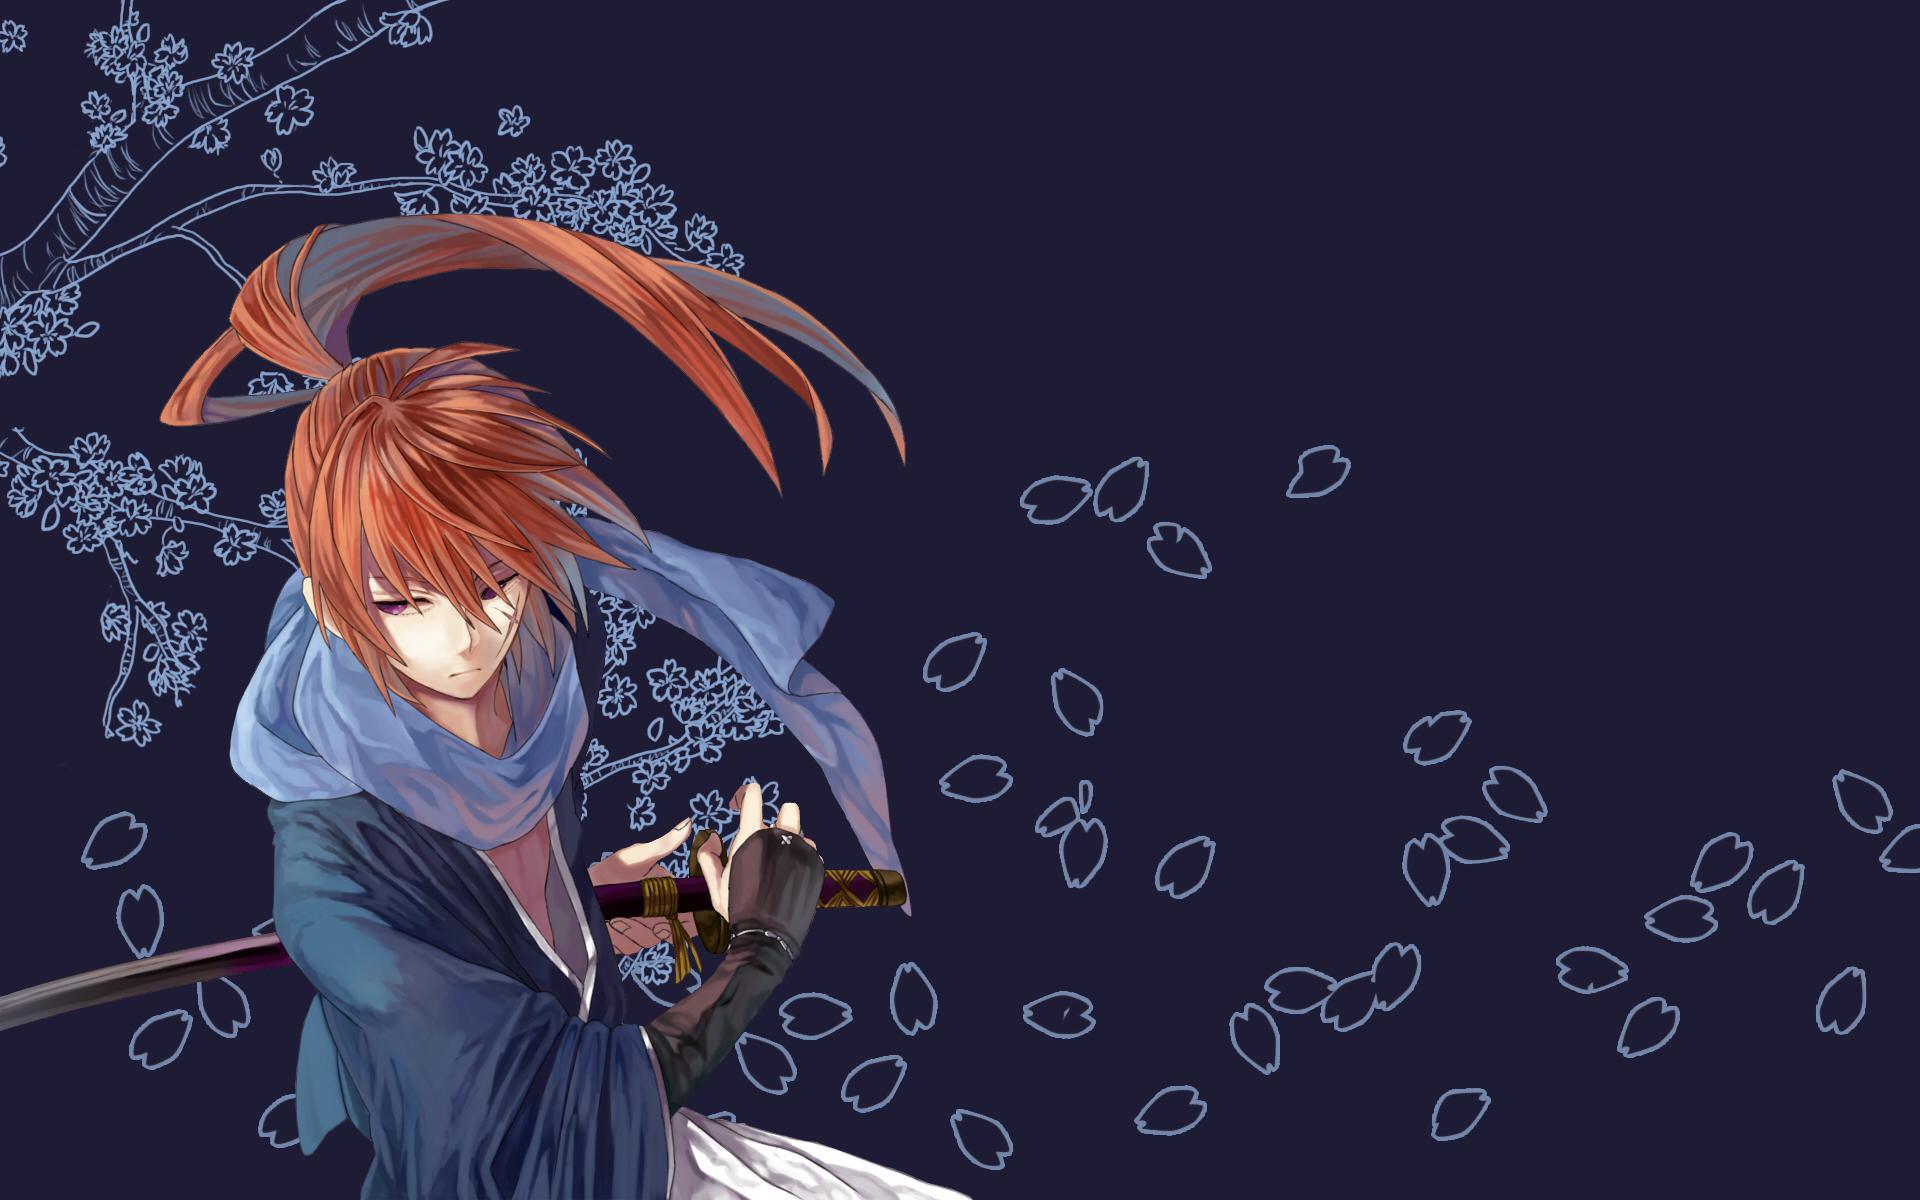 Kaoru & Kenshin image Batousai HD wallpaper and background photo